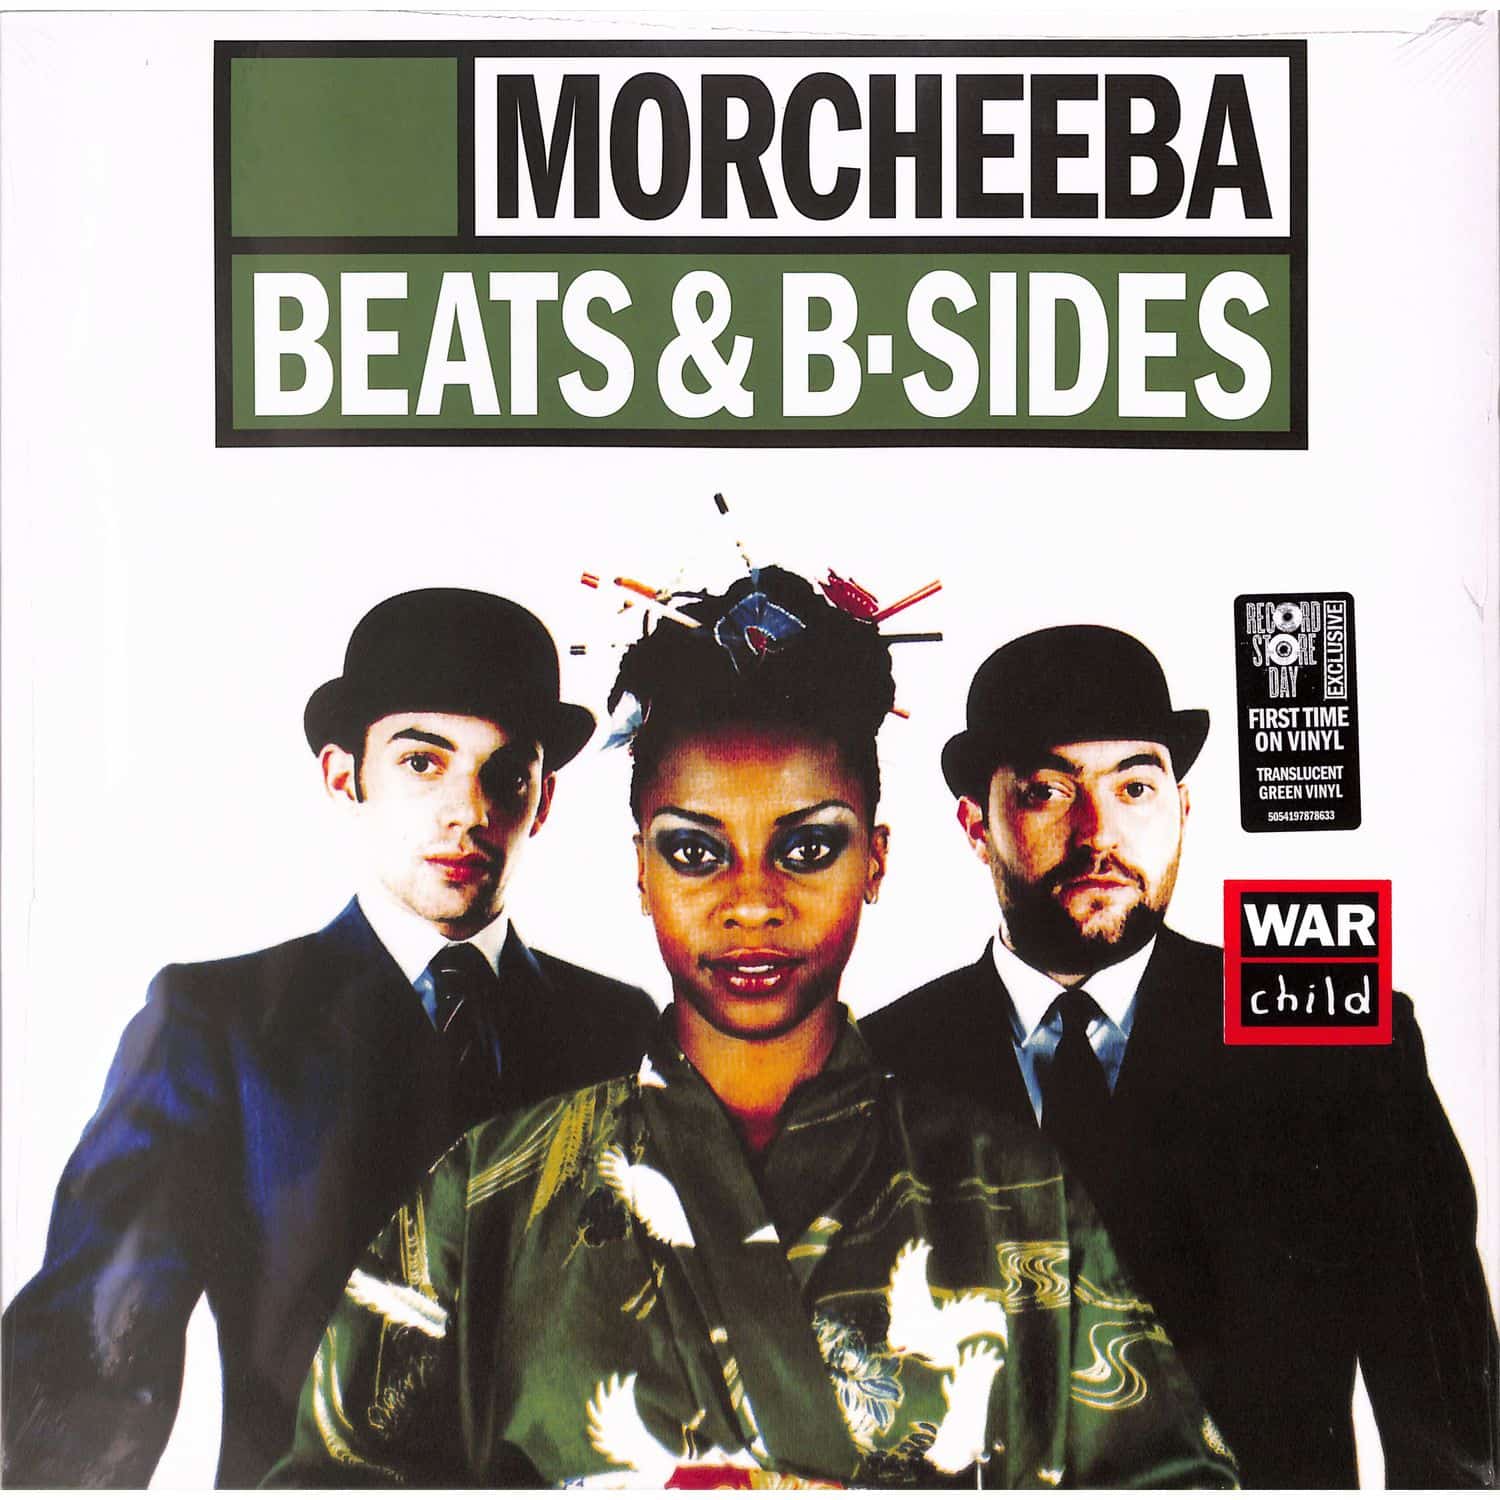 Morcheeba - B-SIDES & BEATS 